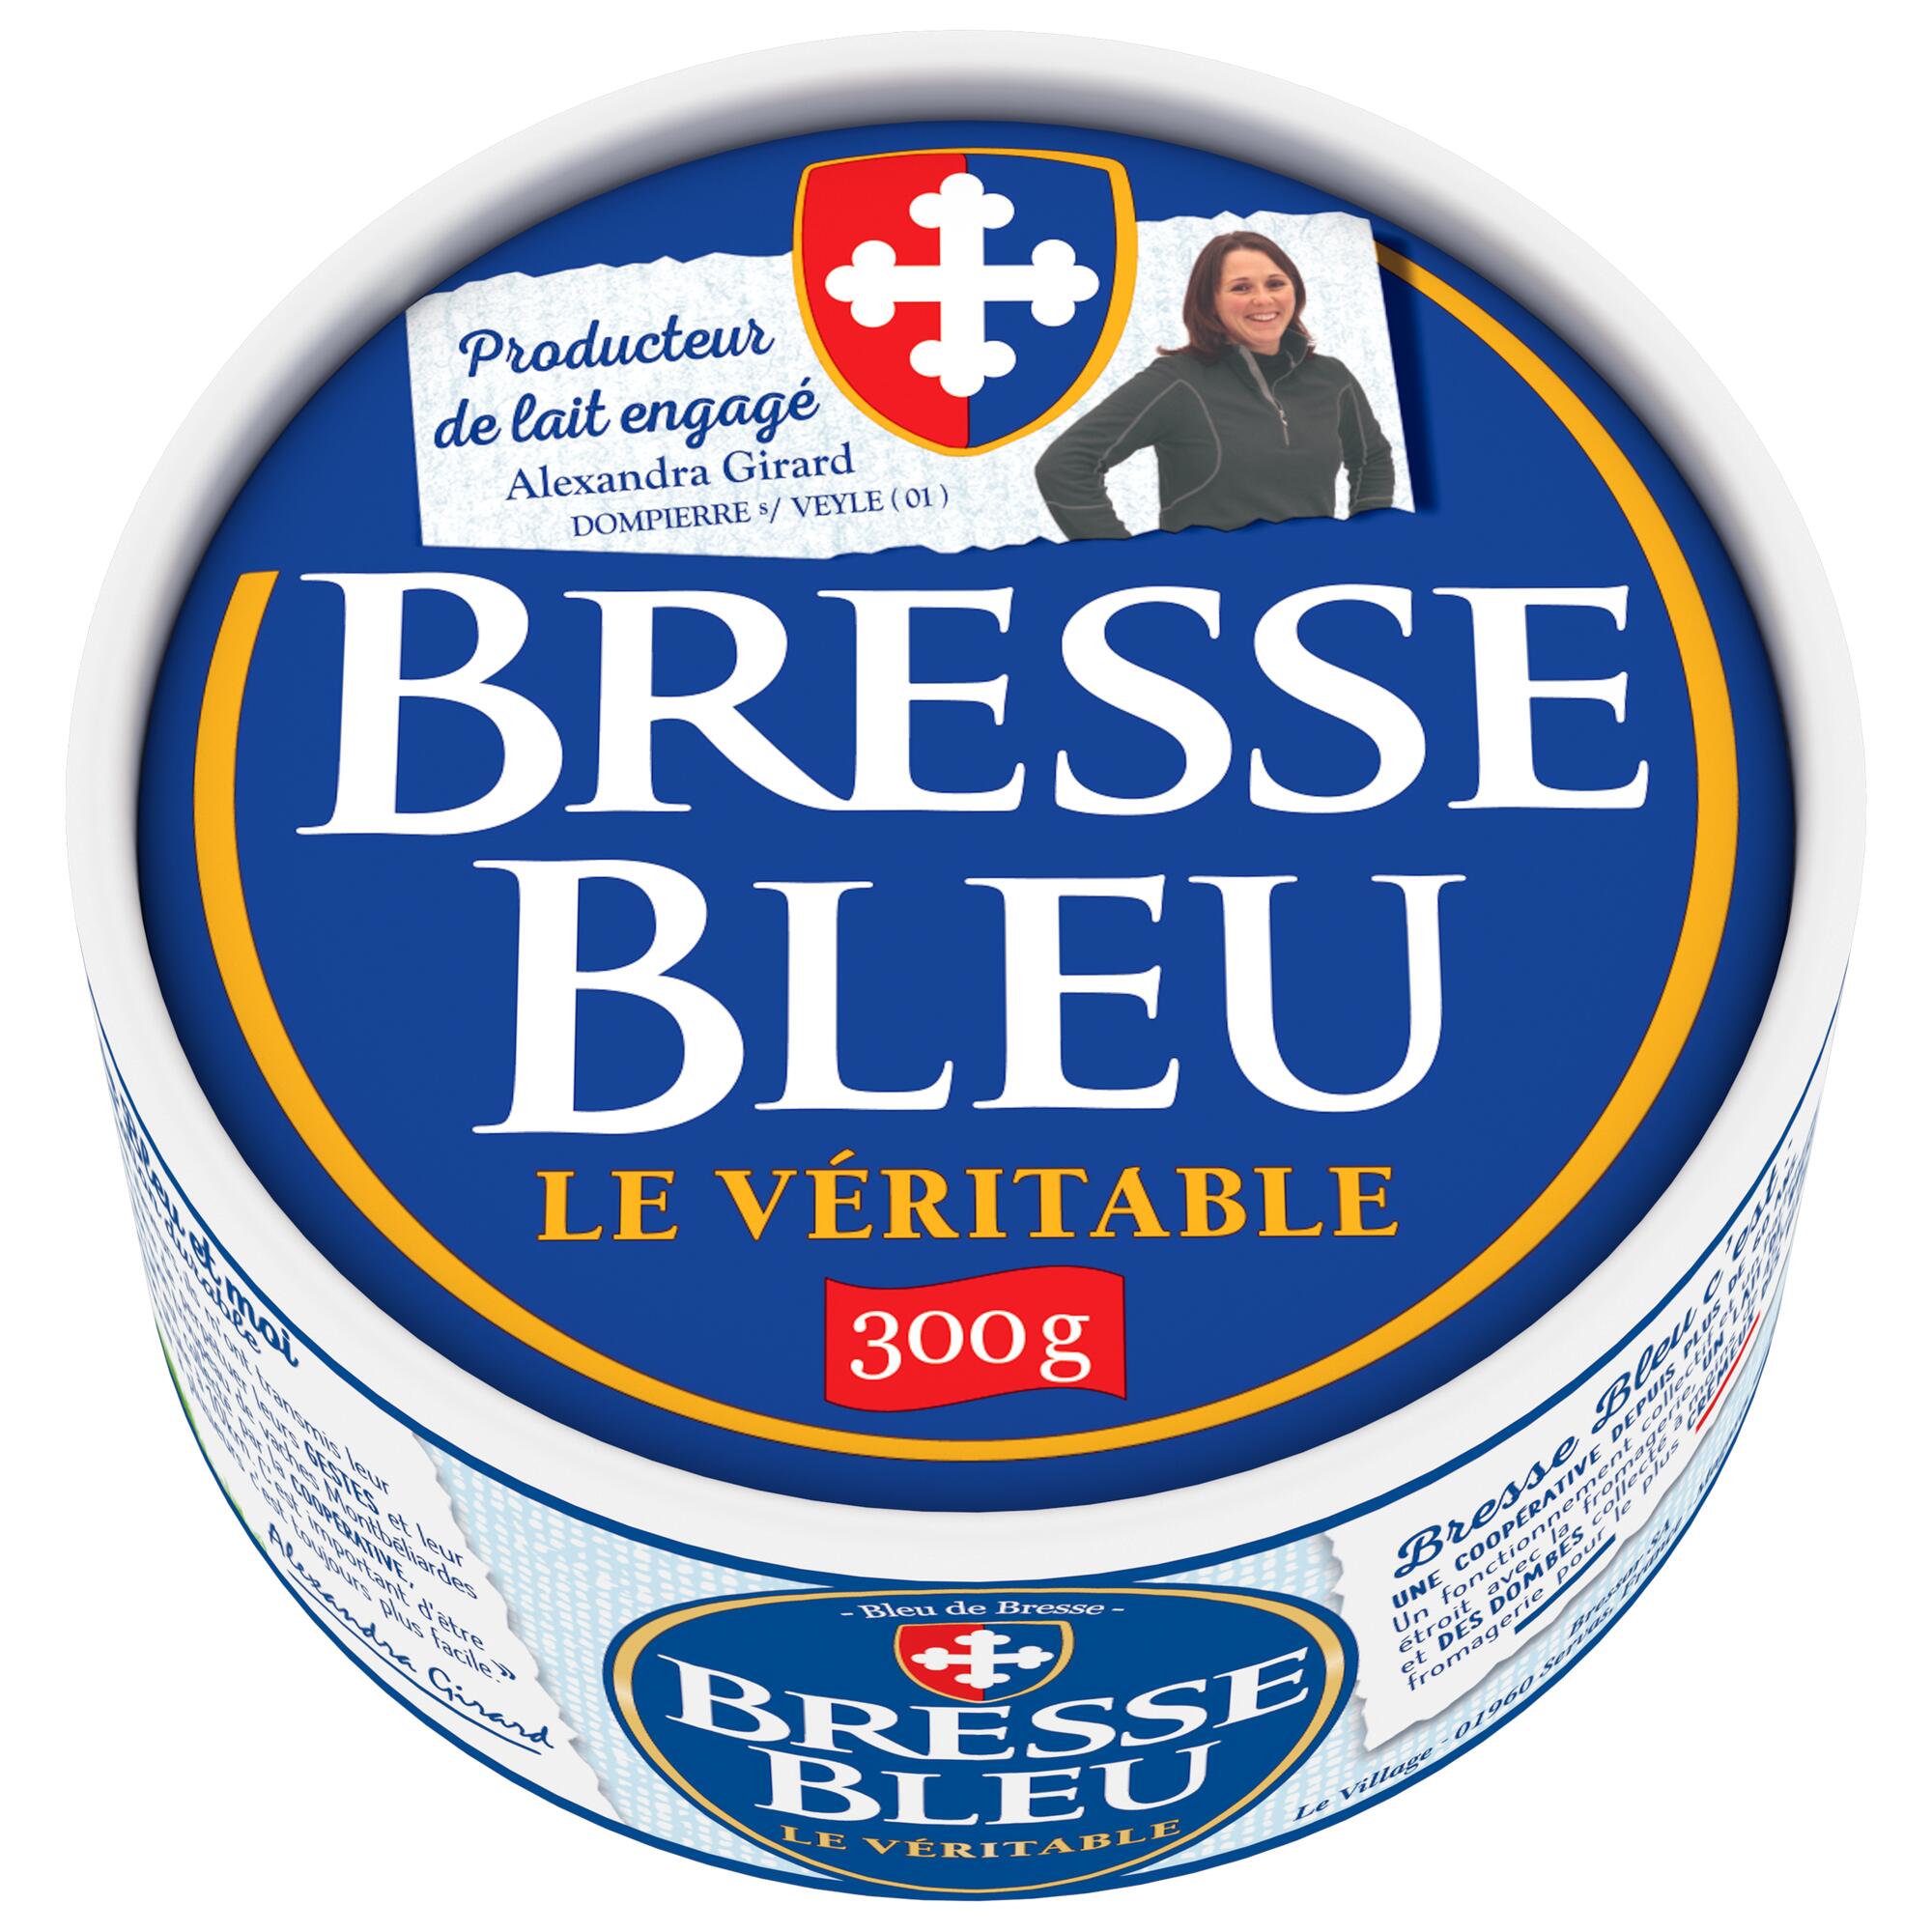 Bresse Bleu Le Véritable 300g